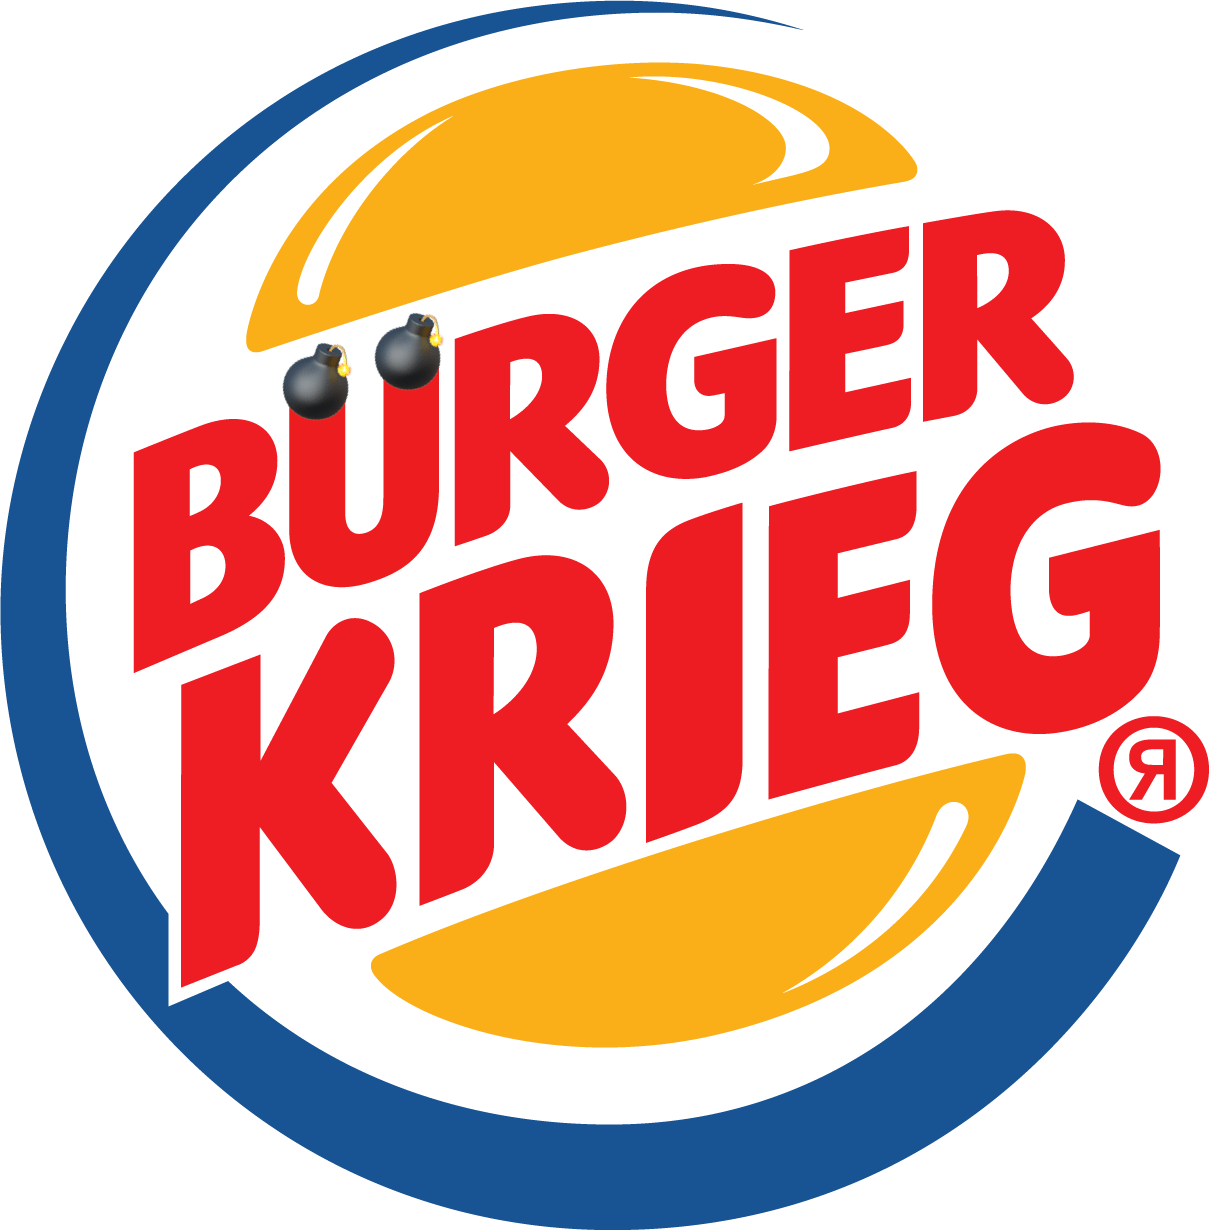 Burger_Krieg_logo_(1999)